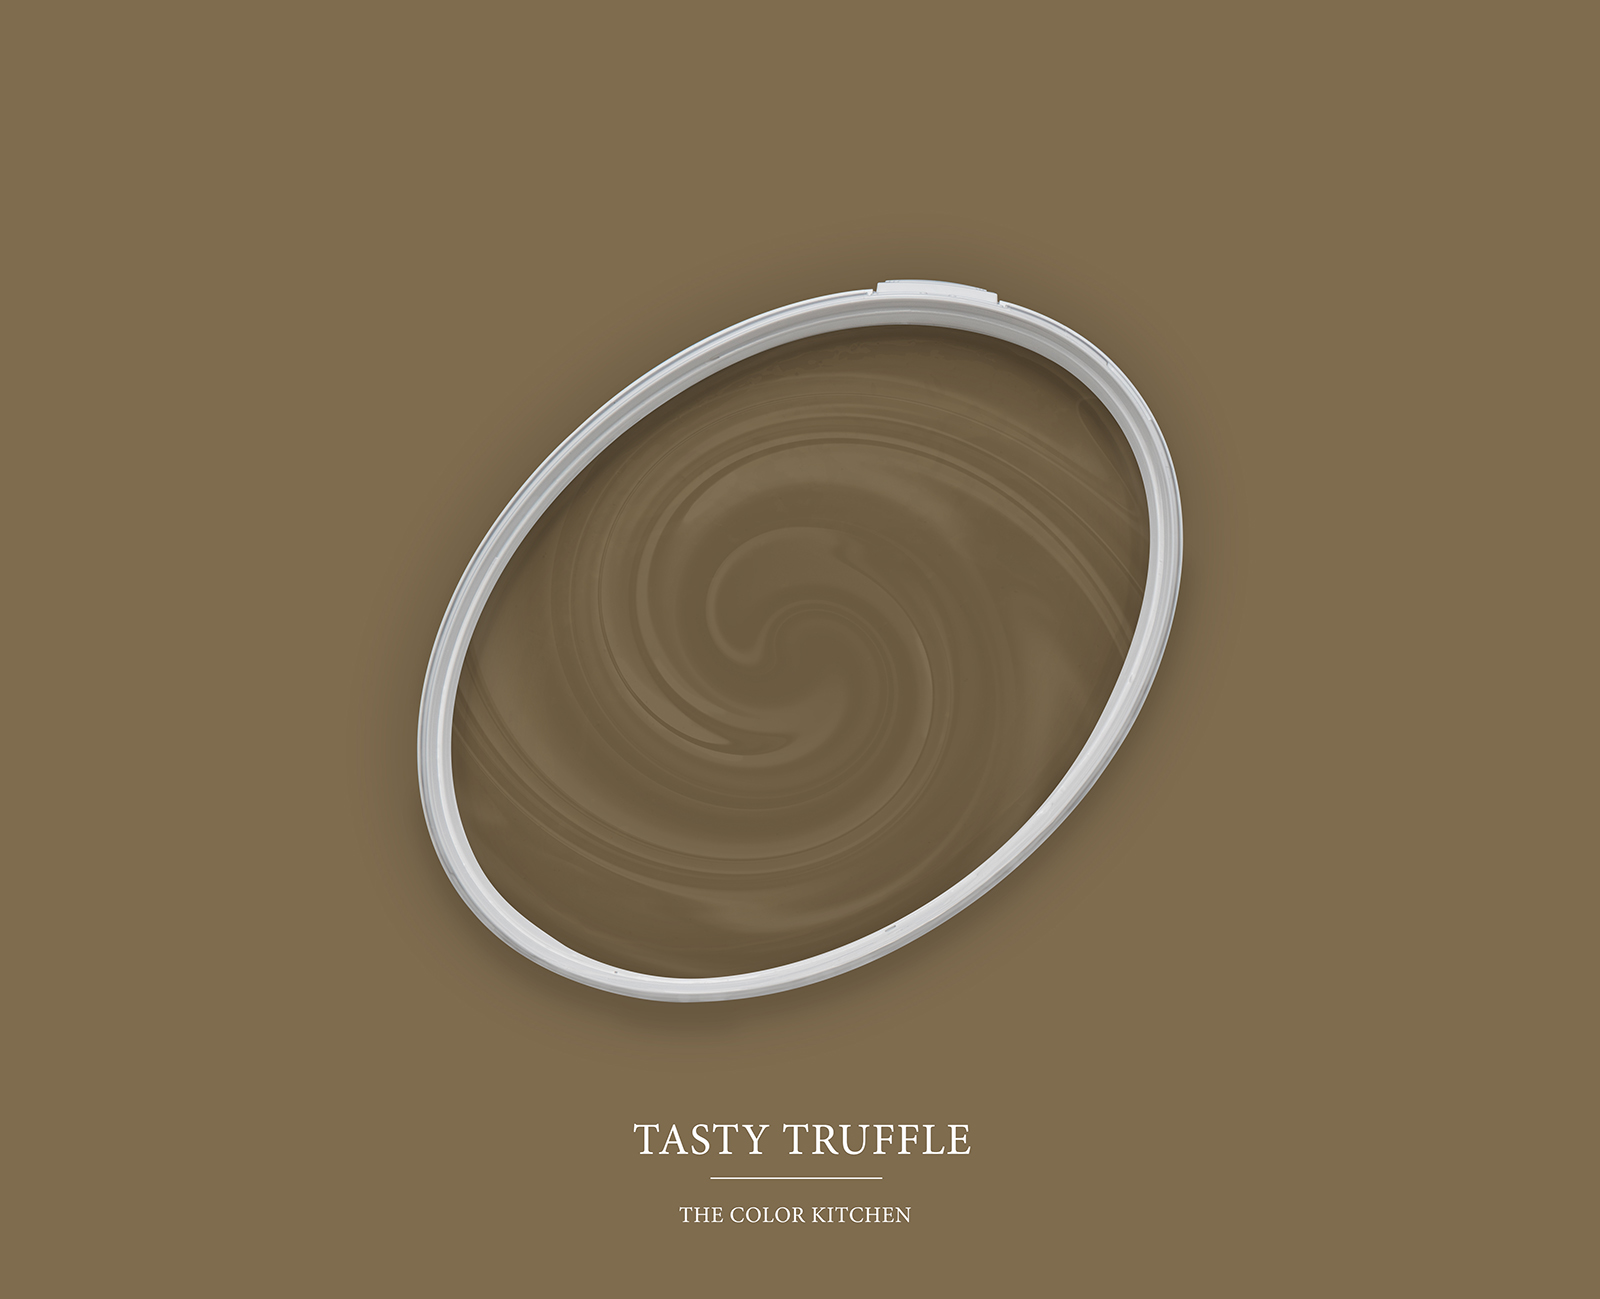         Wandfarbe TCK6014 »Tasty Truffle« in tiefem Braun – 2,5 Liter
    